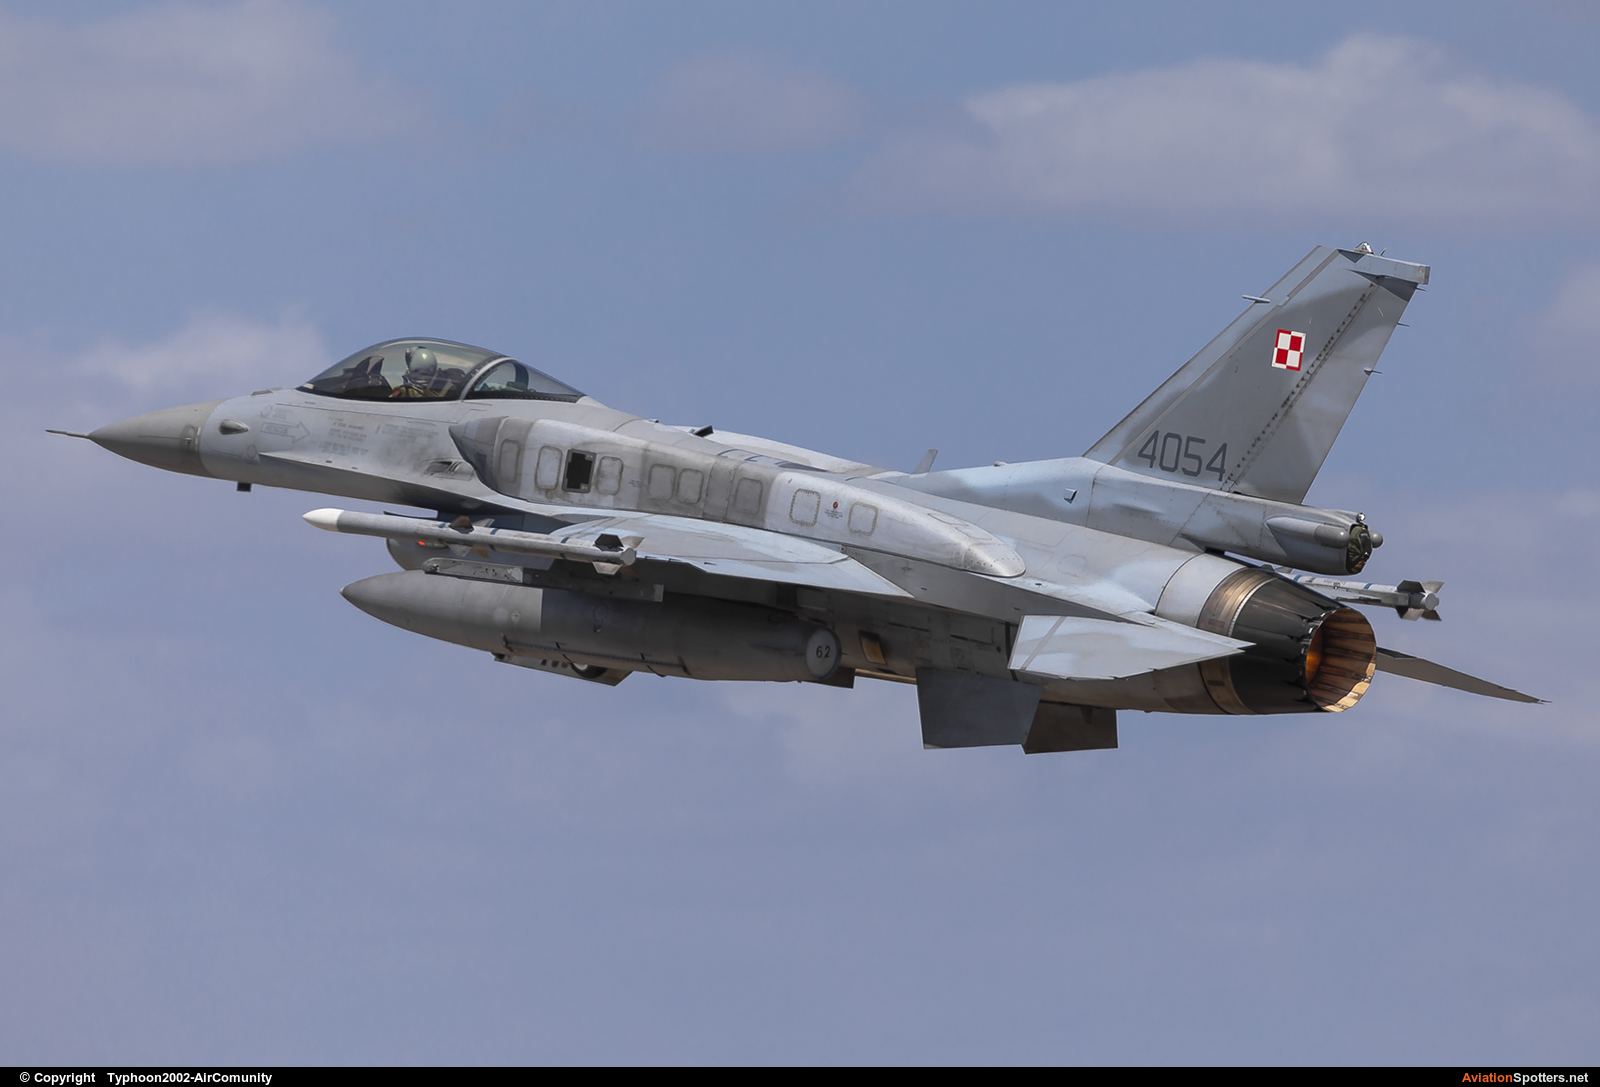 Poland - Air Force  -  F-16C Block 52+ Fighting Falcon  (4054) By Typhoon2002-AirComunity (AirComunity)